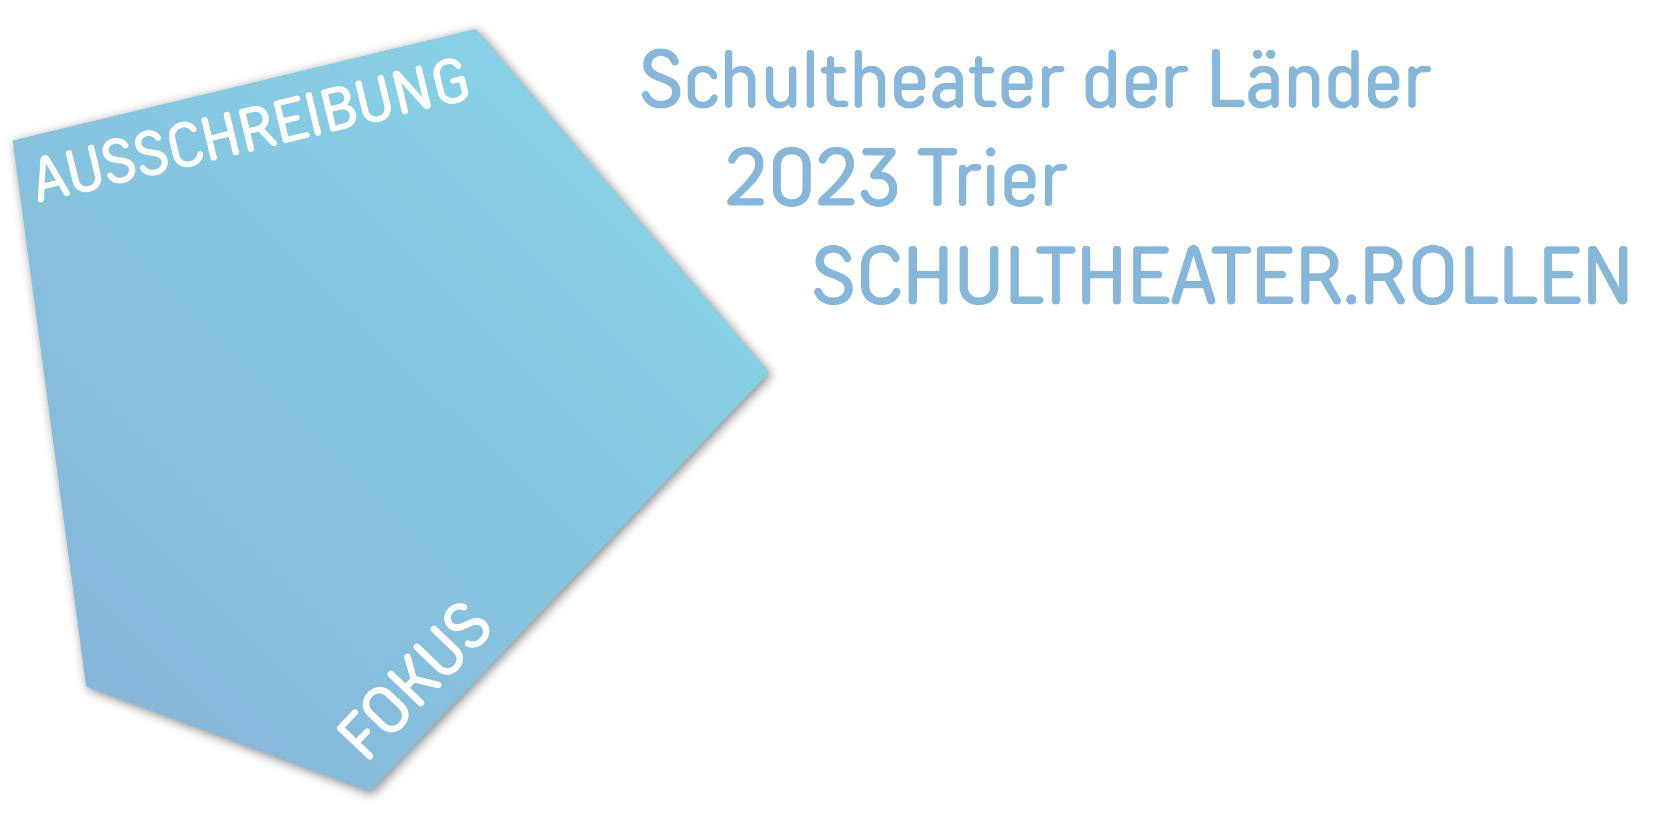 Ausschreibung SDL 2023 "Schultheater.Rollen"